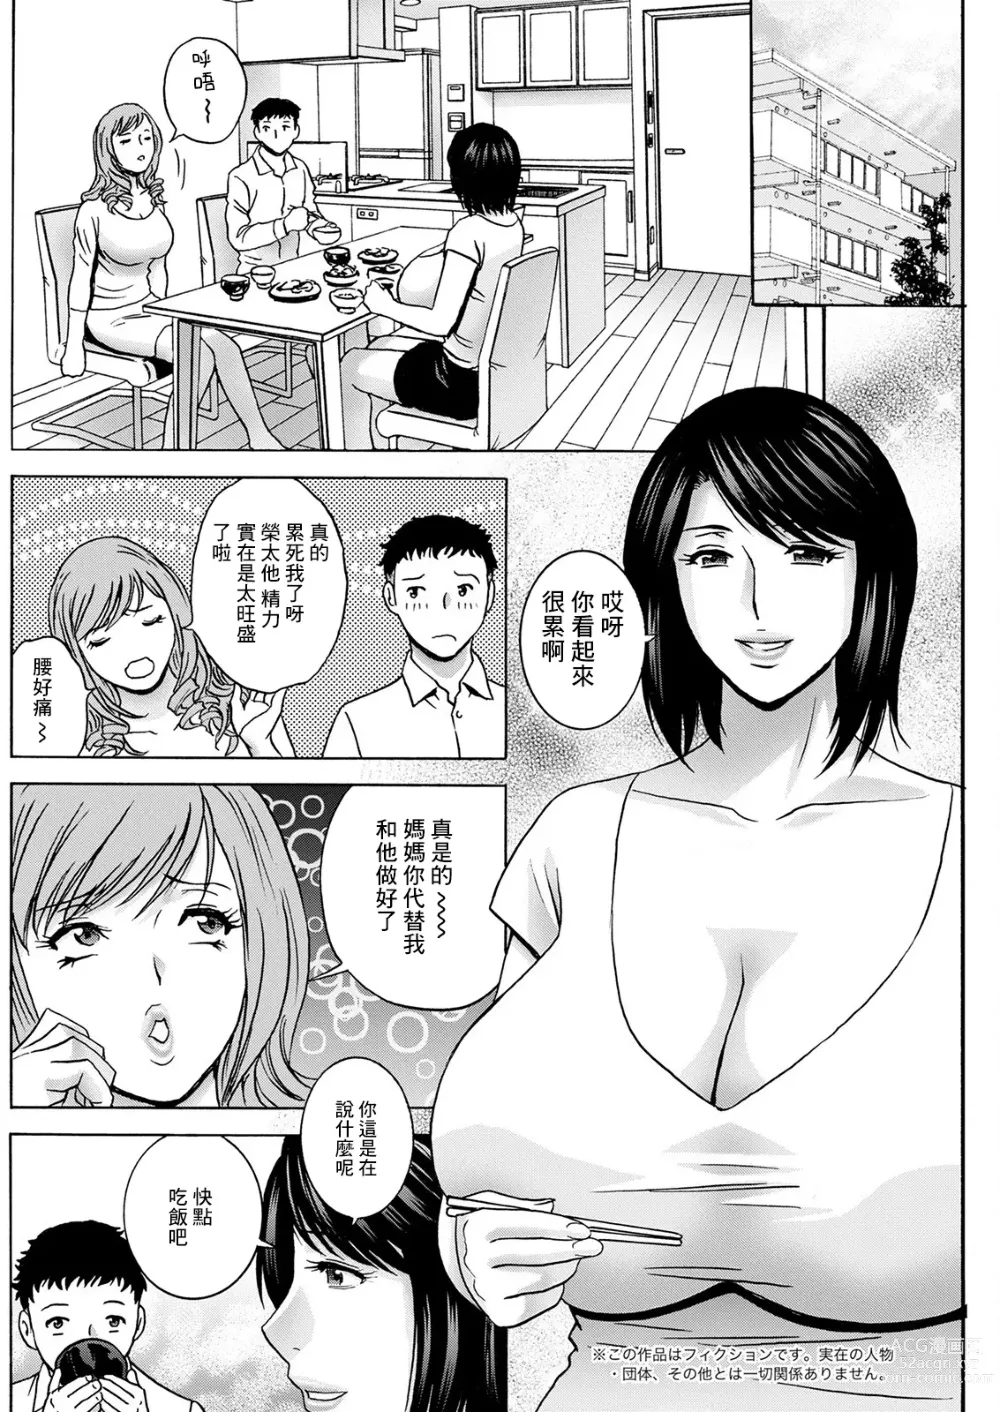 Page 6 of manga Torokeru Yome Haha Ch. 1